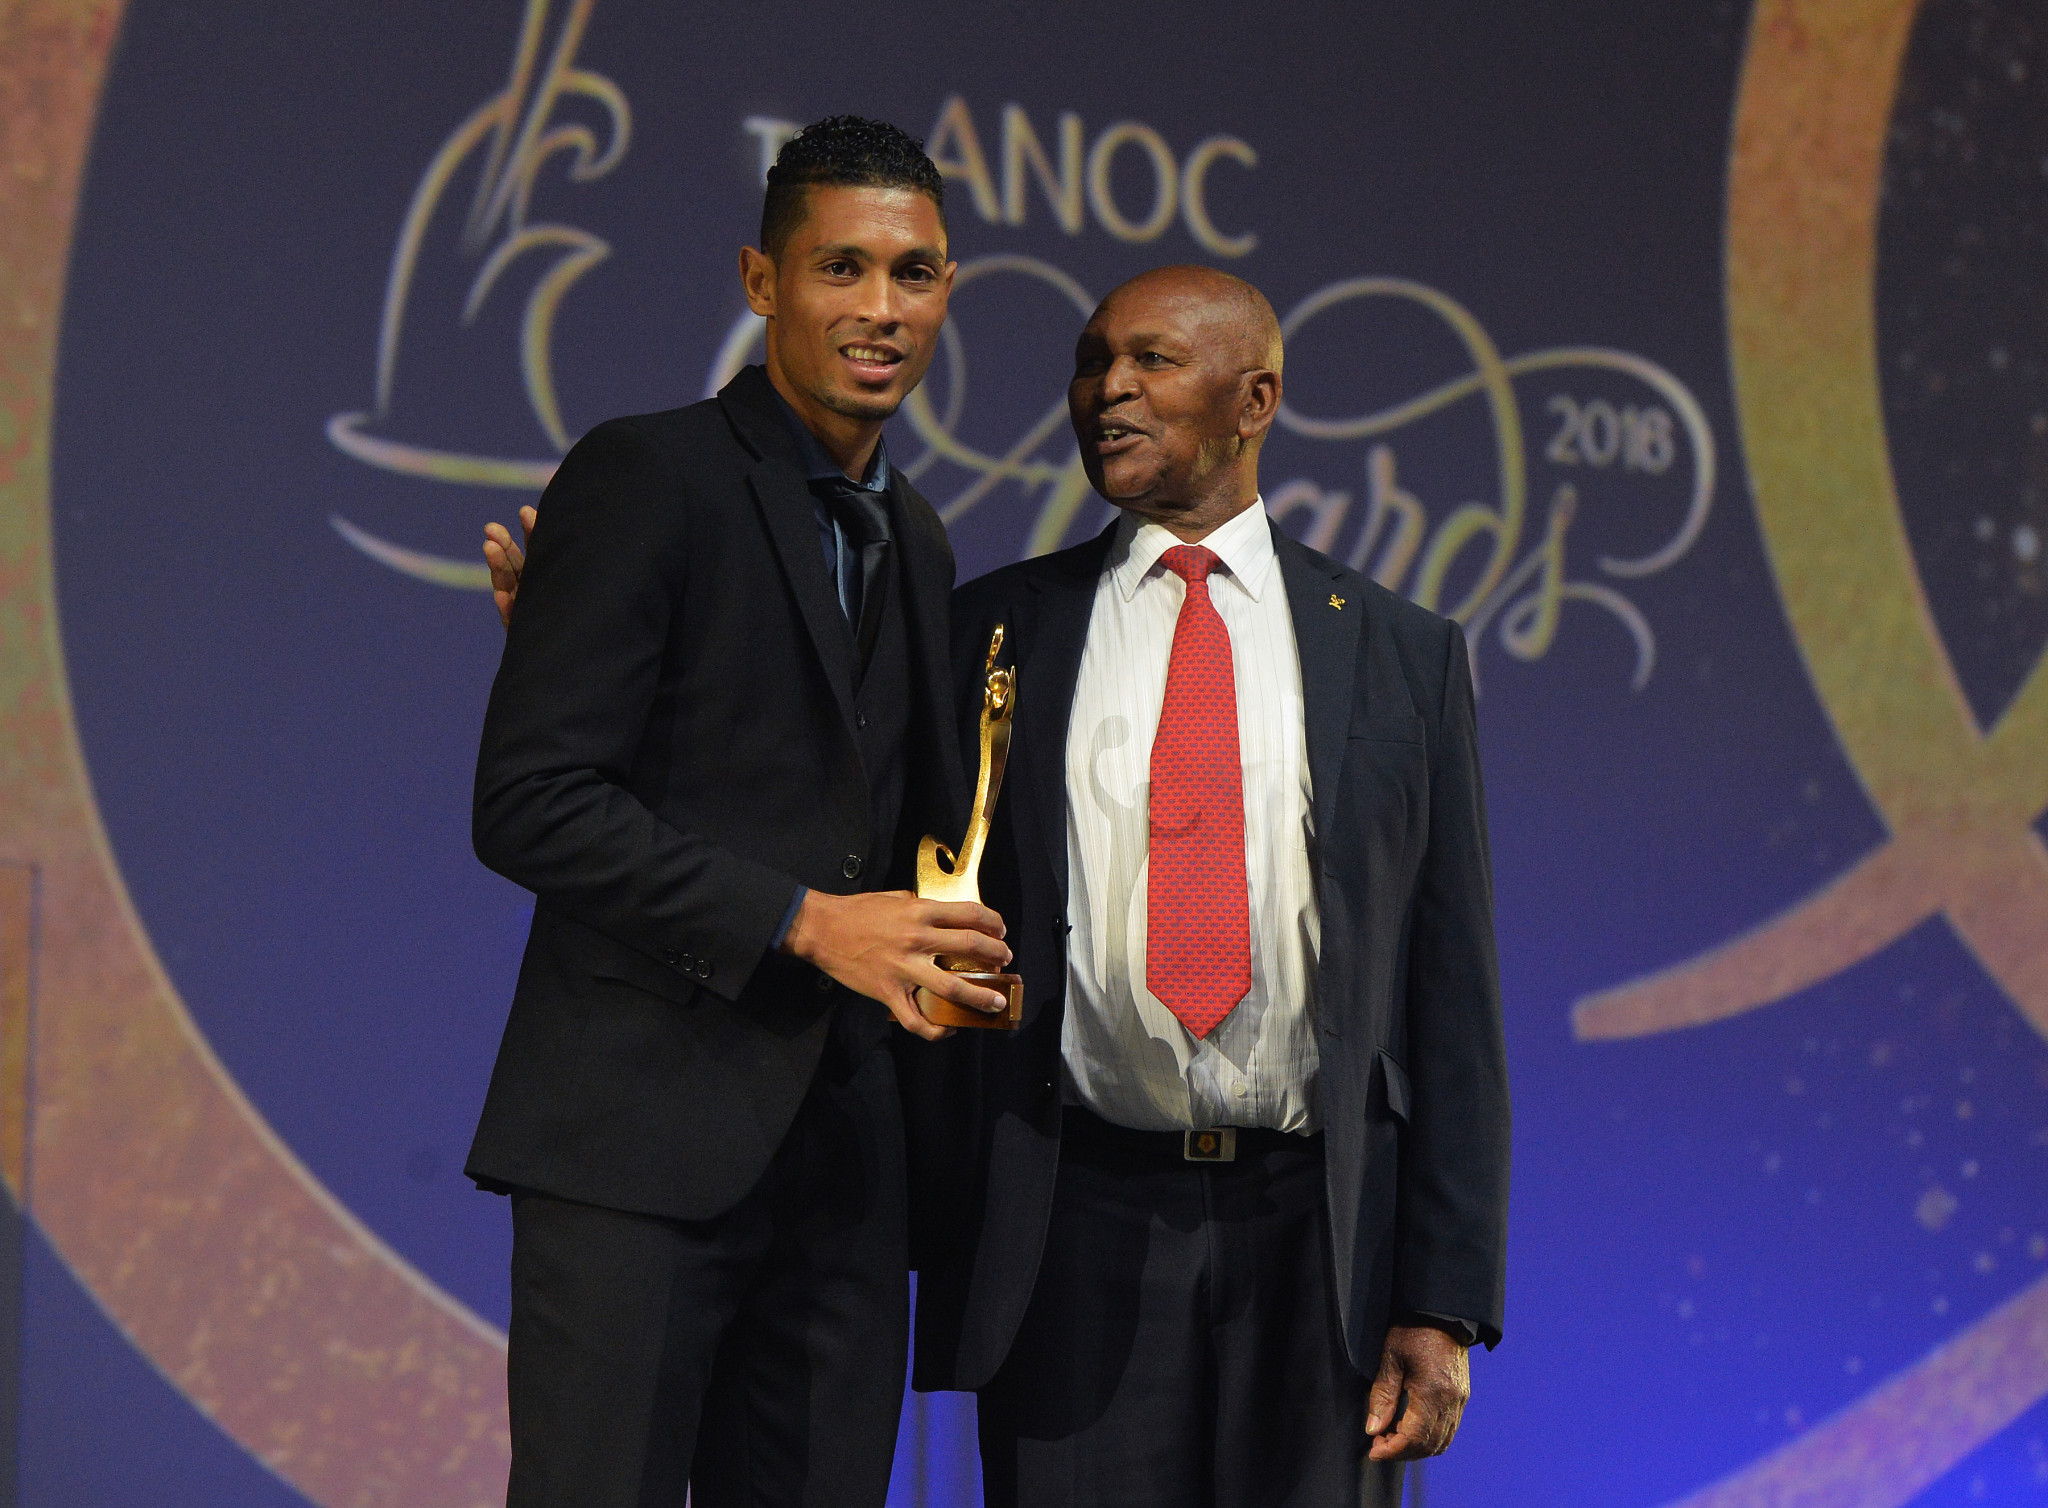 South African 400 metres runner Wayde van Niekerk secured the men's award in 2016 ©Getty Images